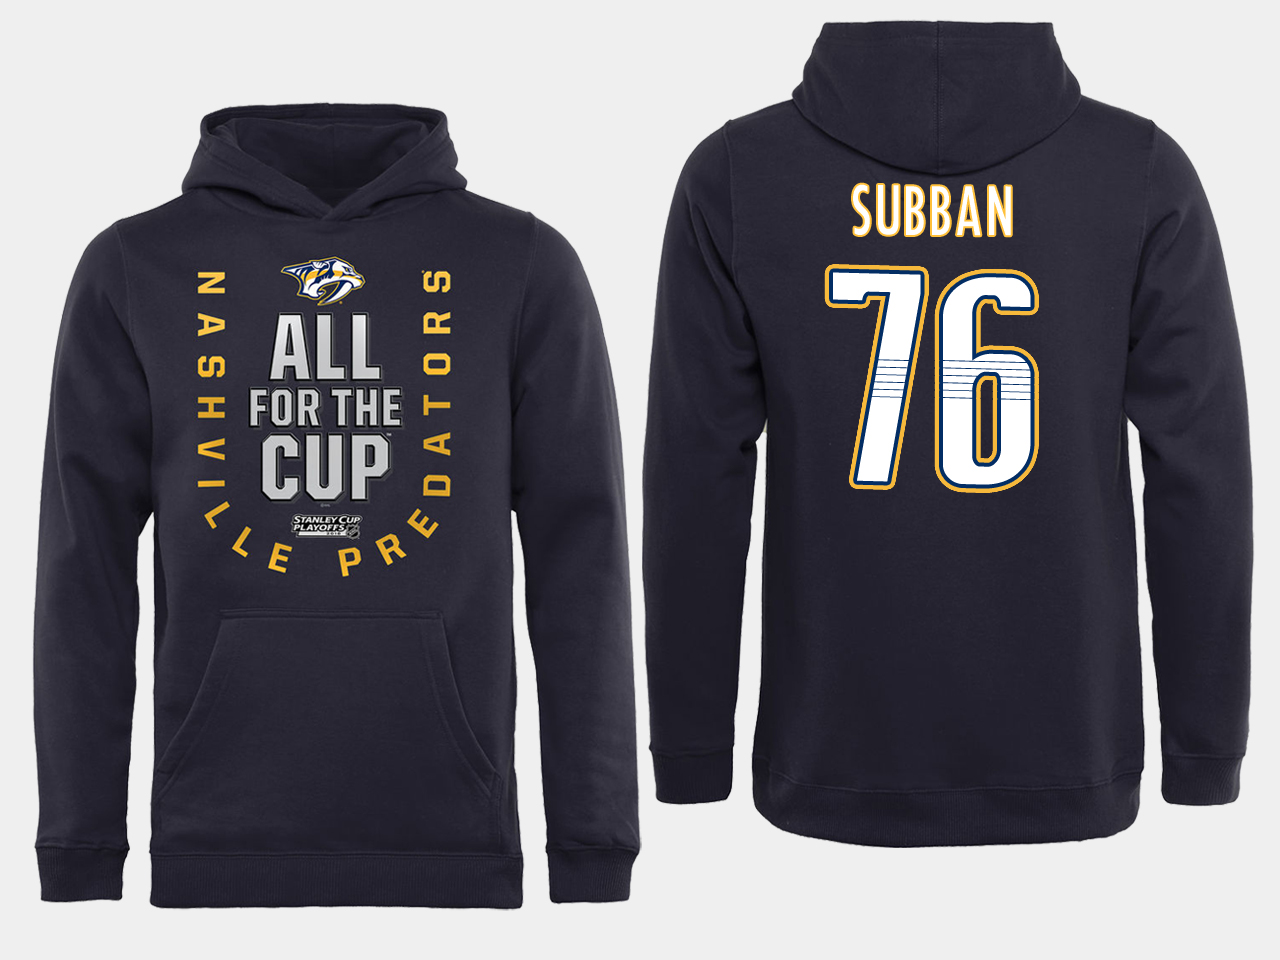 Men NHL Adidas Nashville Predators #76 Subban black ALL for the Cup hoodie